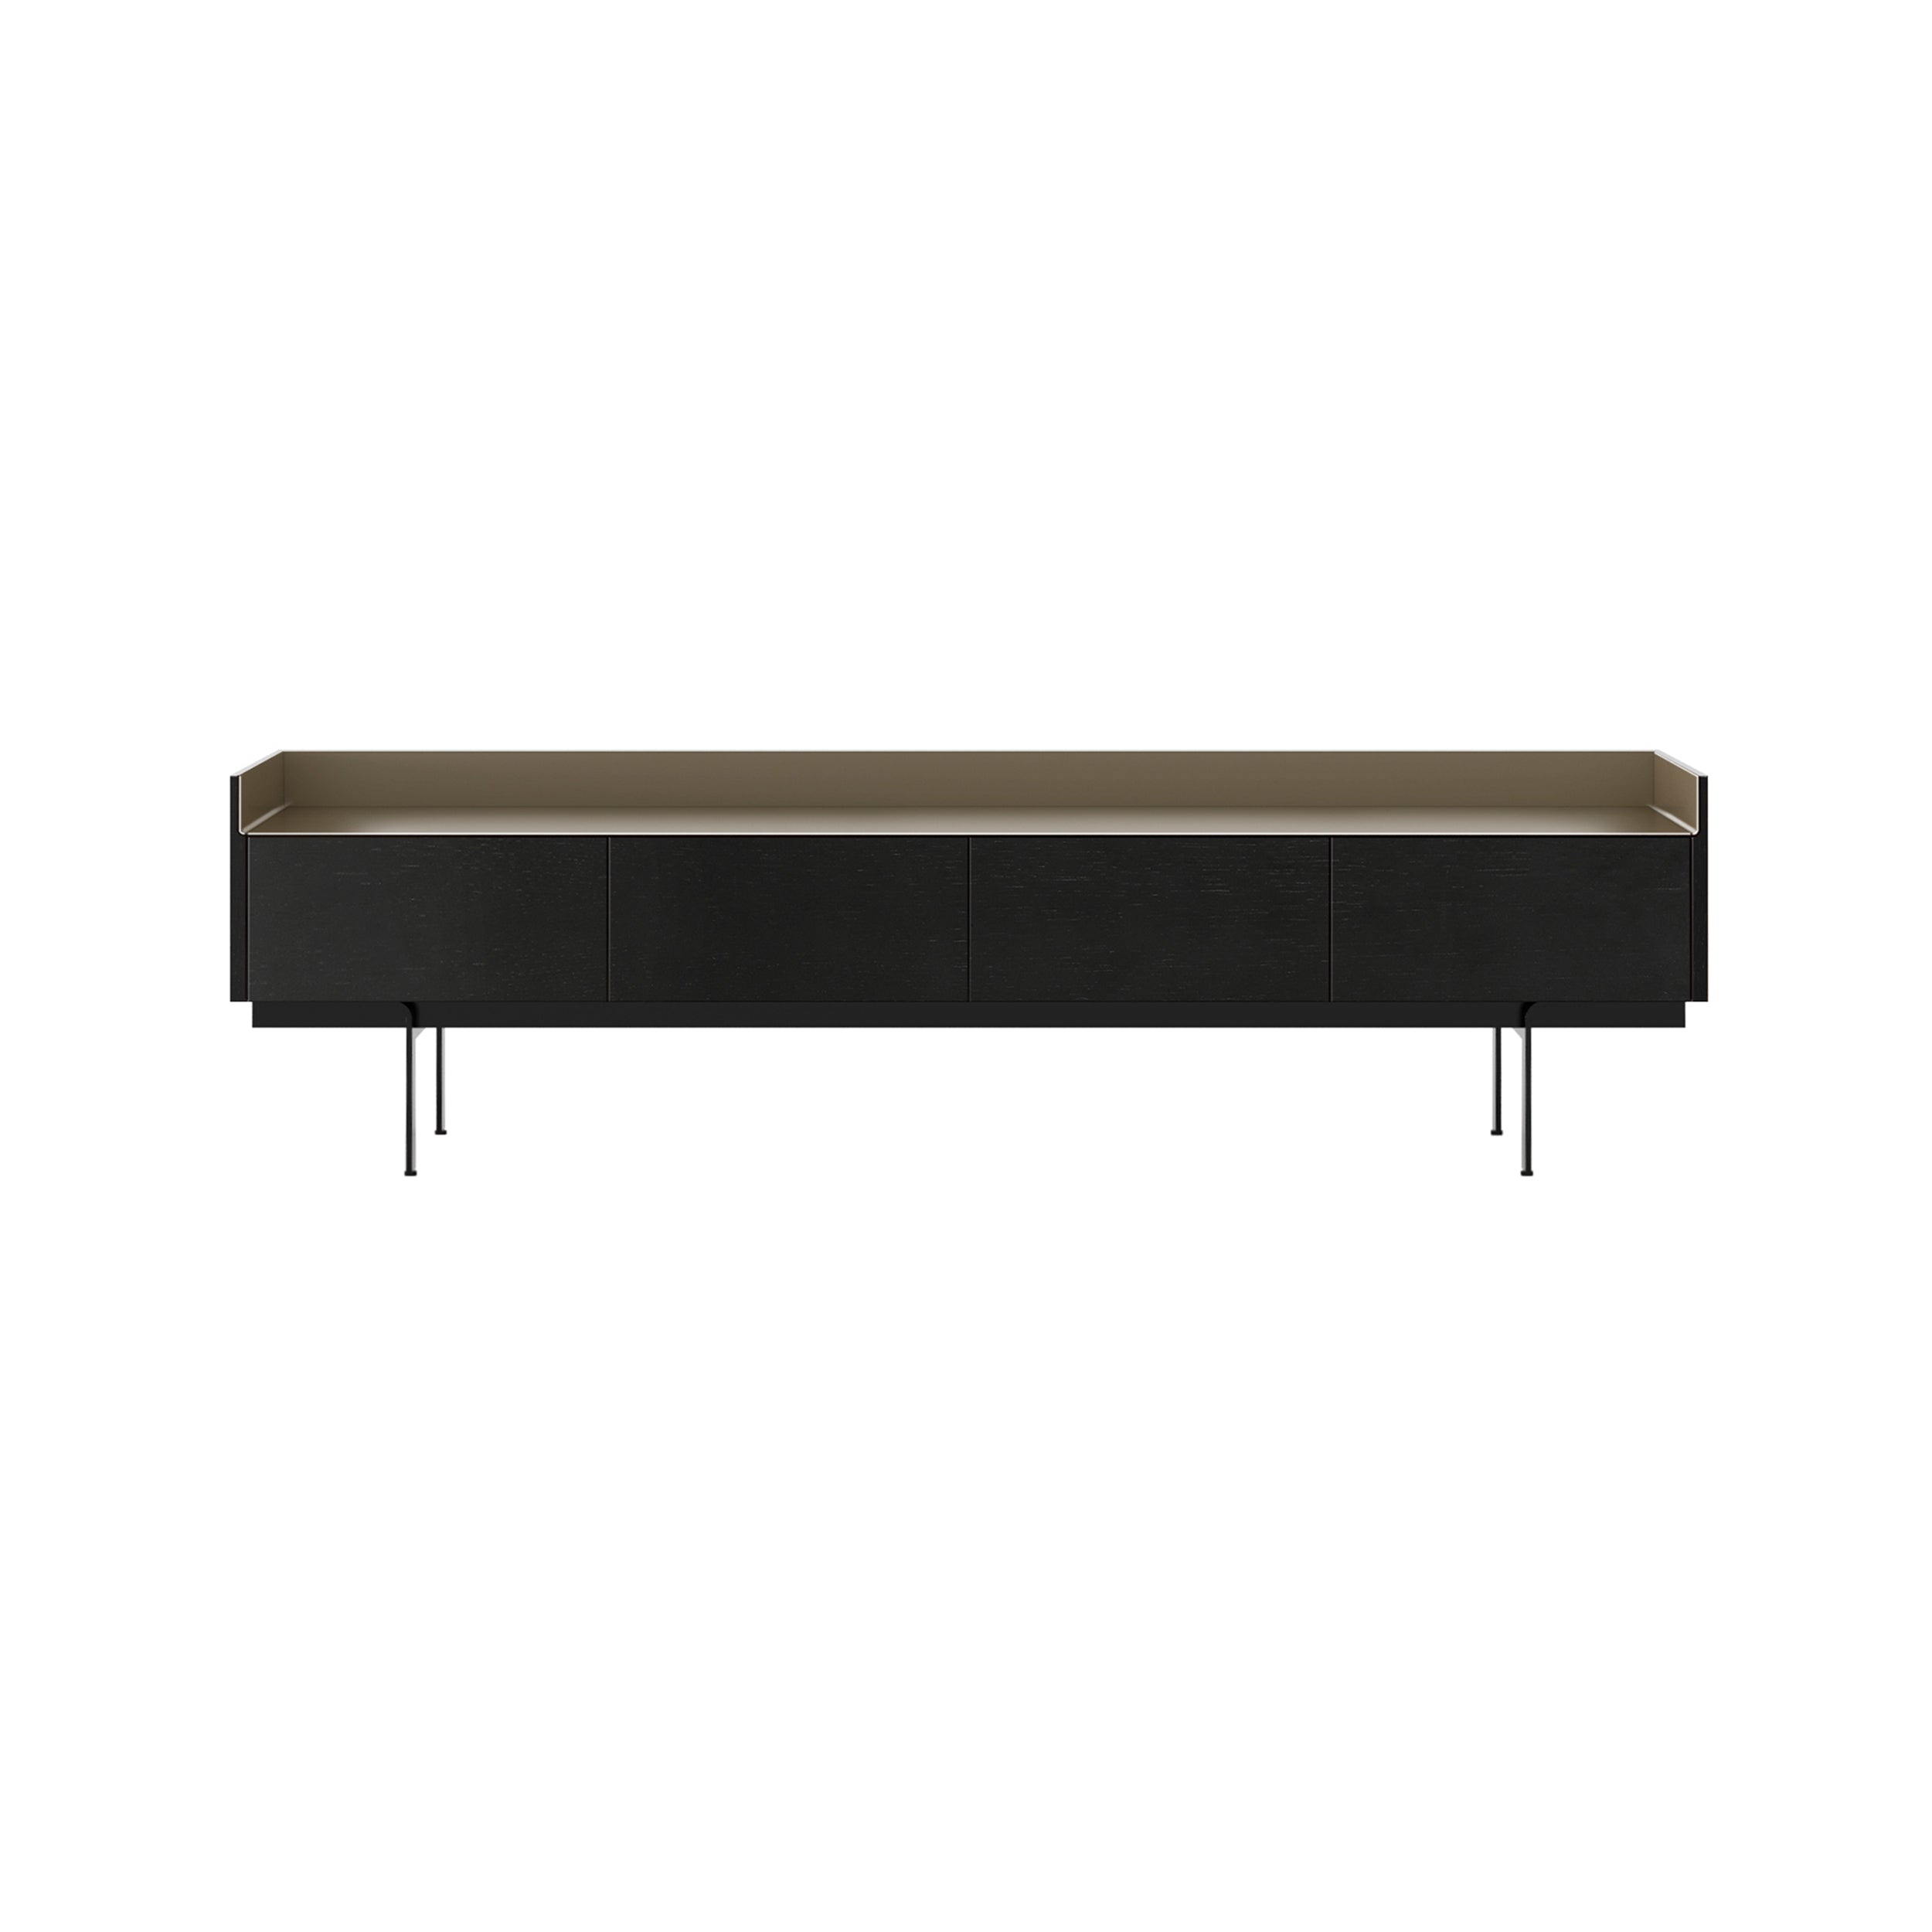 Stockholm Slim Sideboard: STH451 + Ebony Stained Oak + Anodized Aluminum Bronze + Black